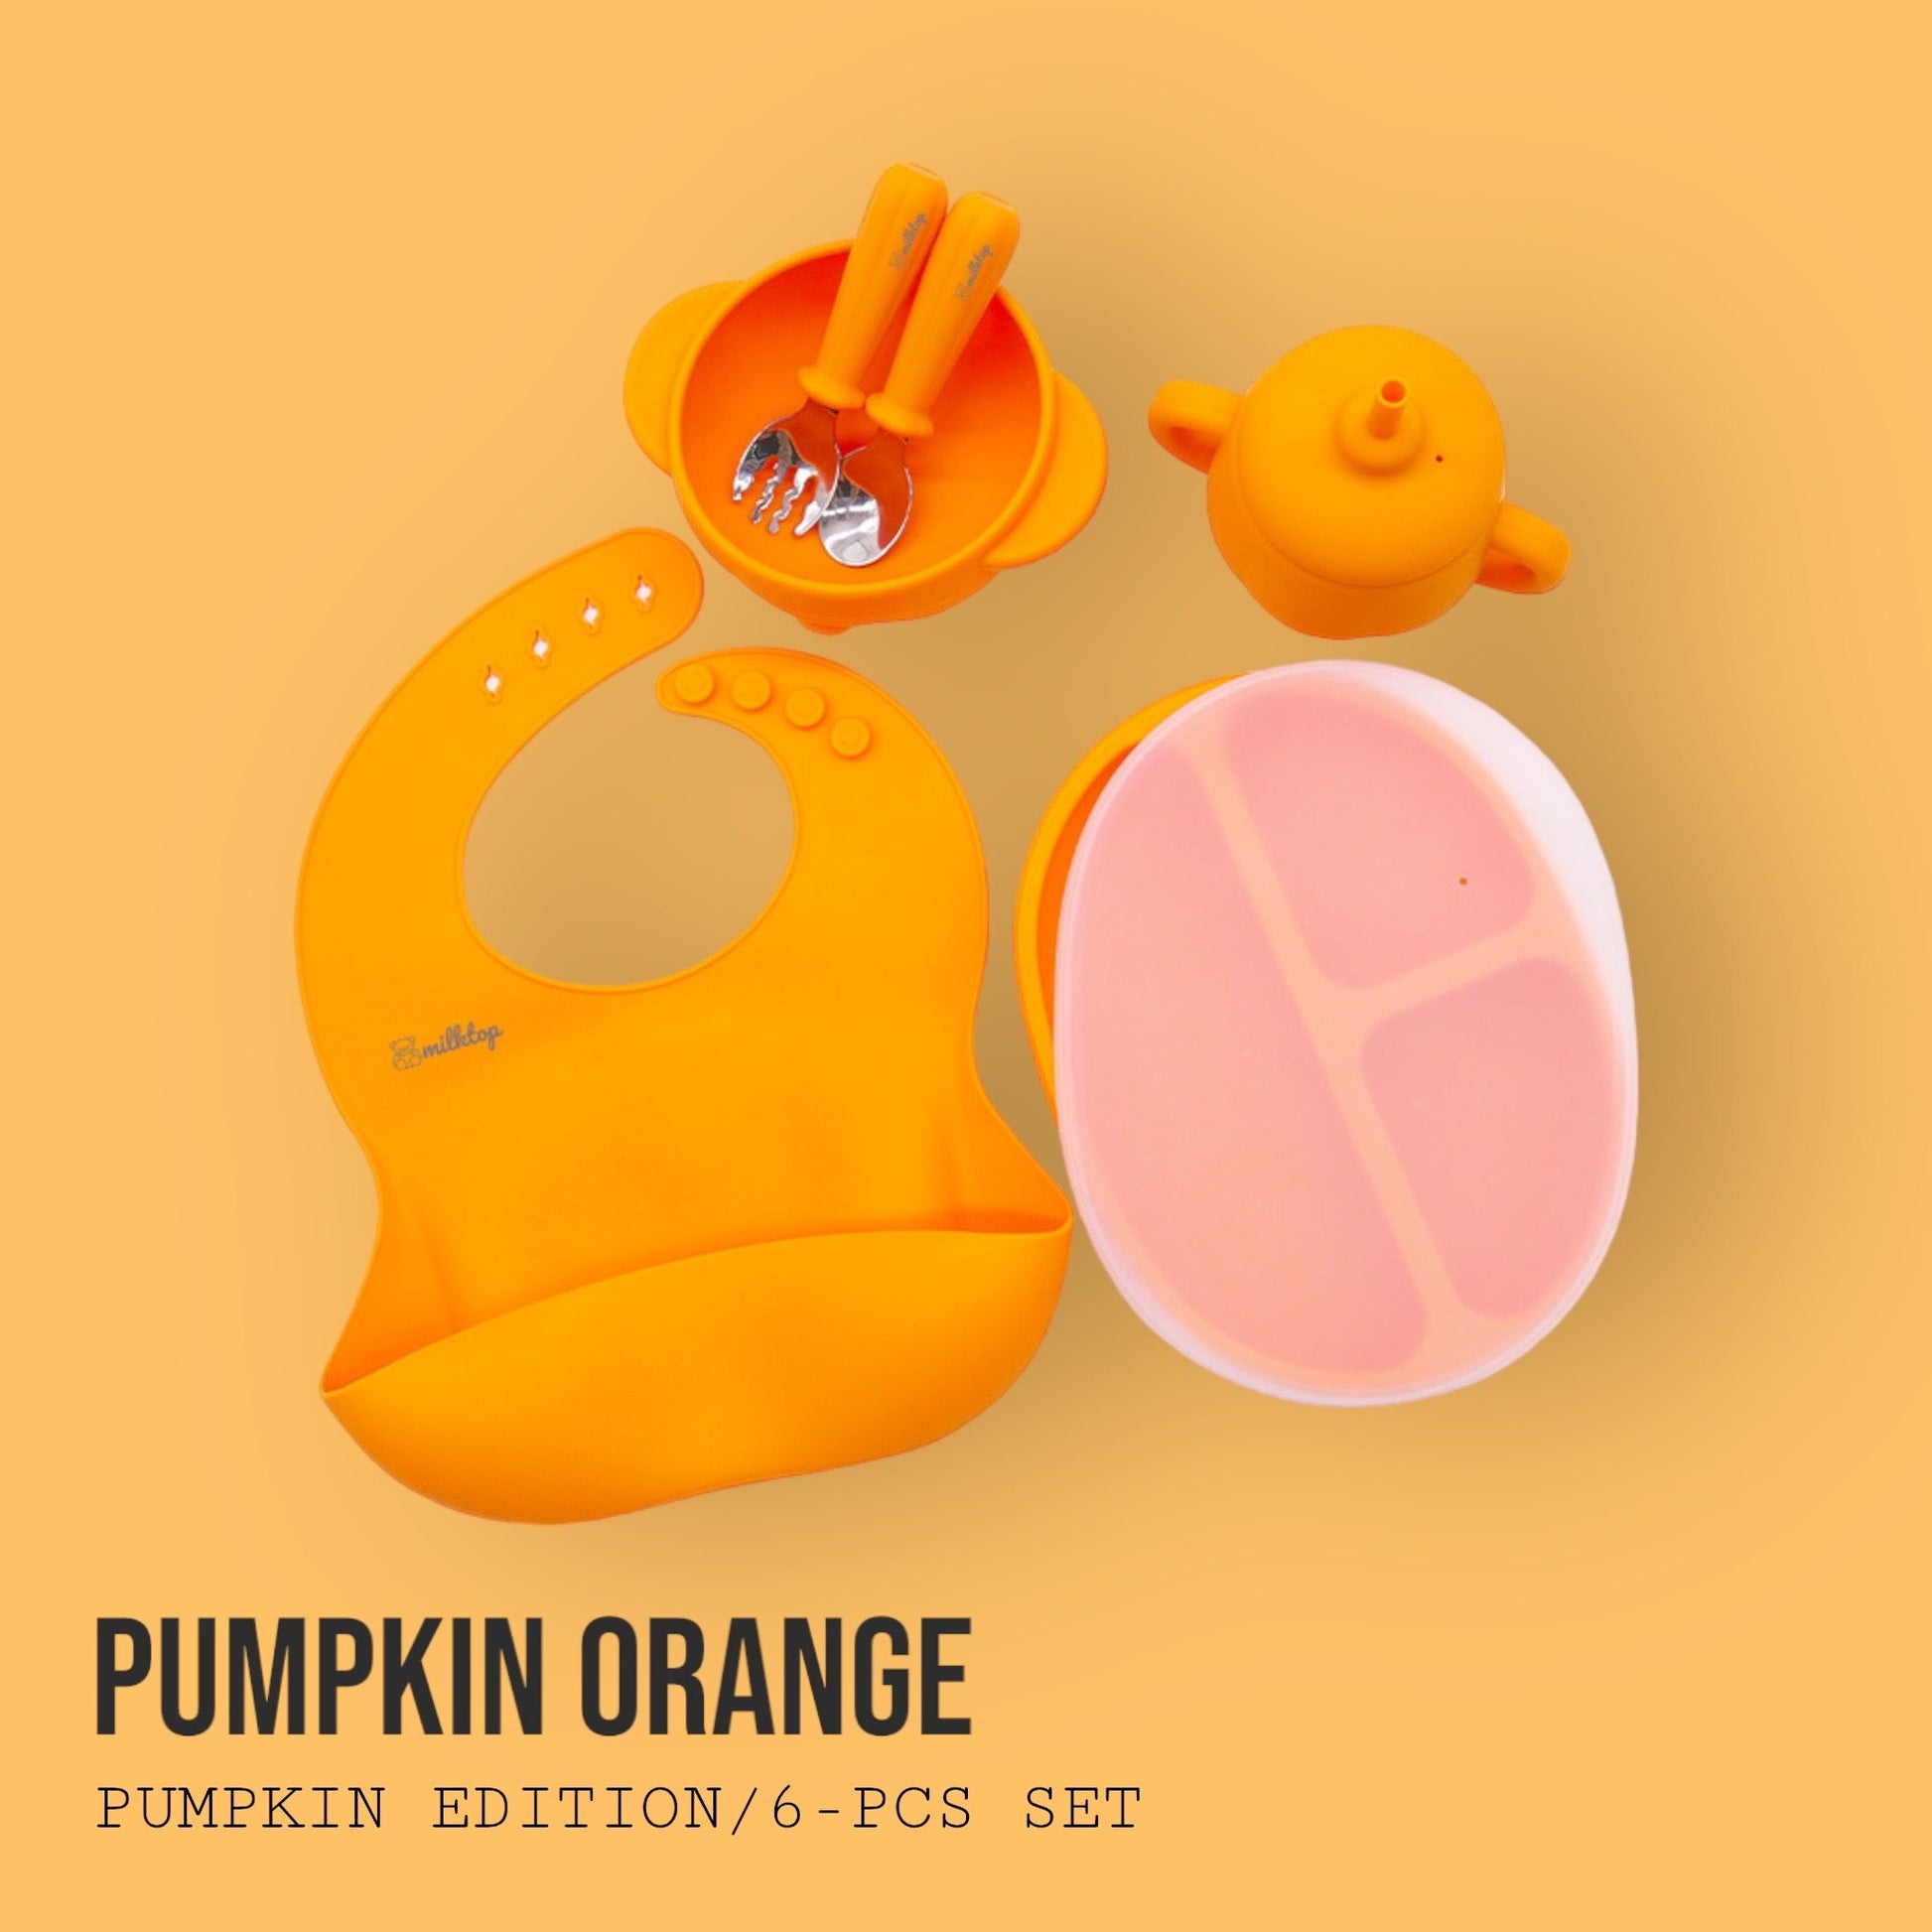 Platinum Silicone Baby Feeding Set Pumpkin Edition - milktop